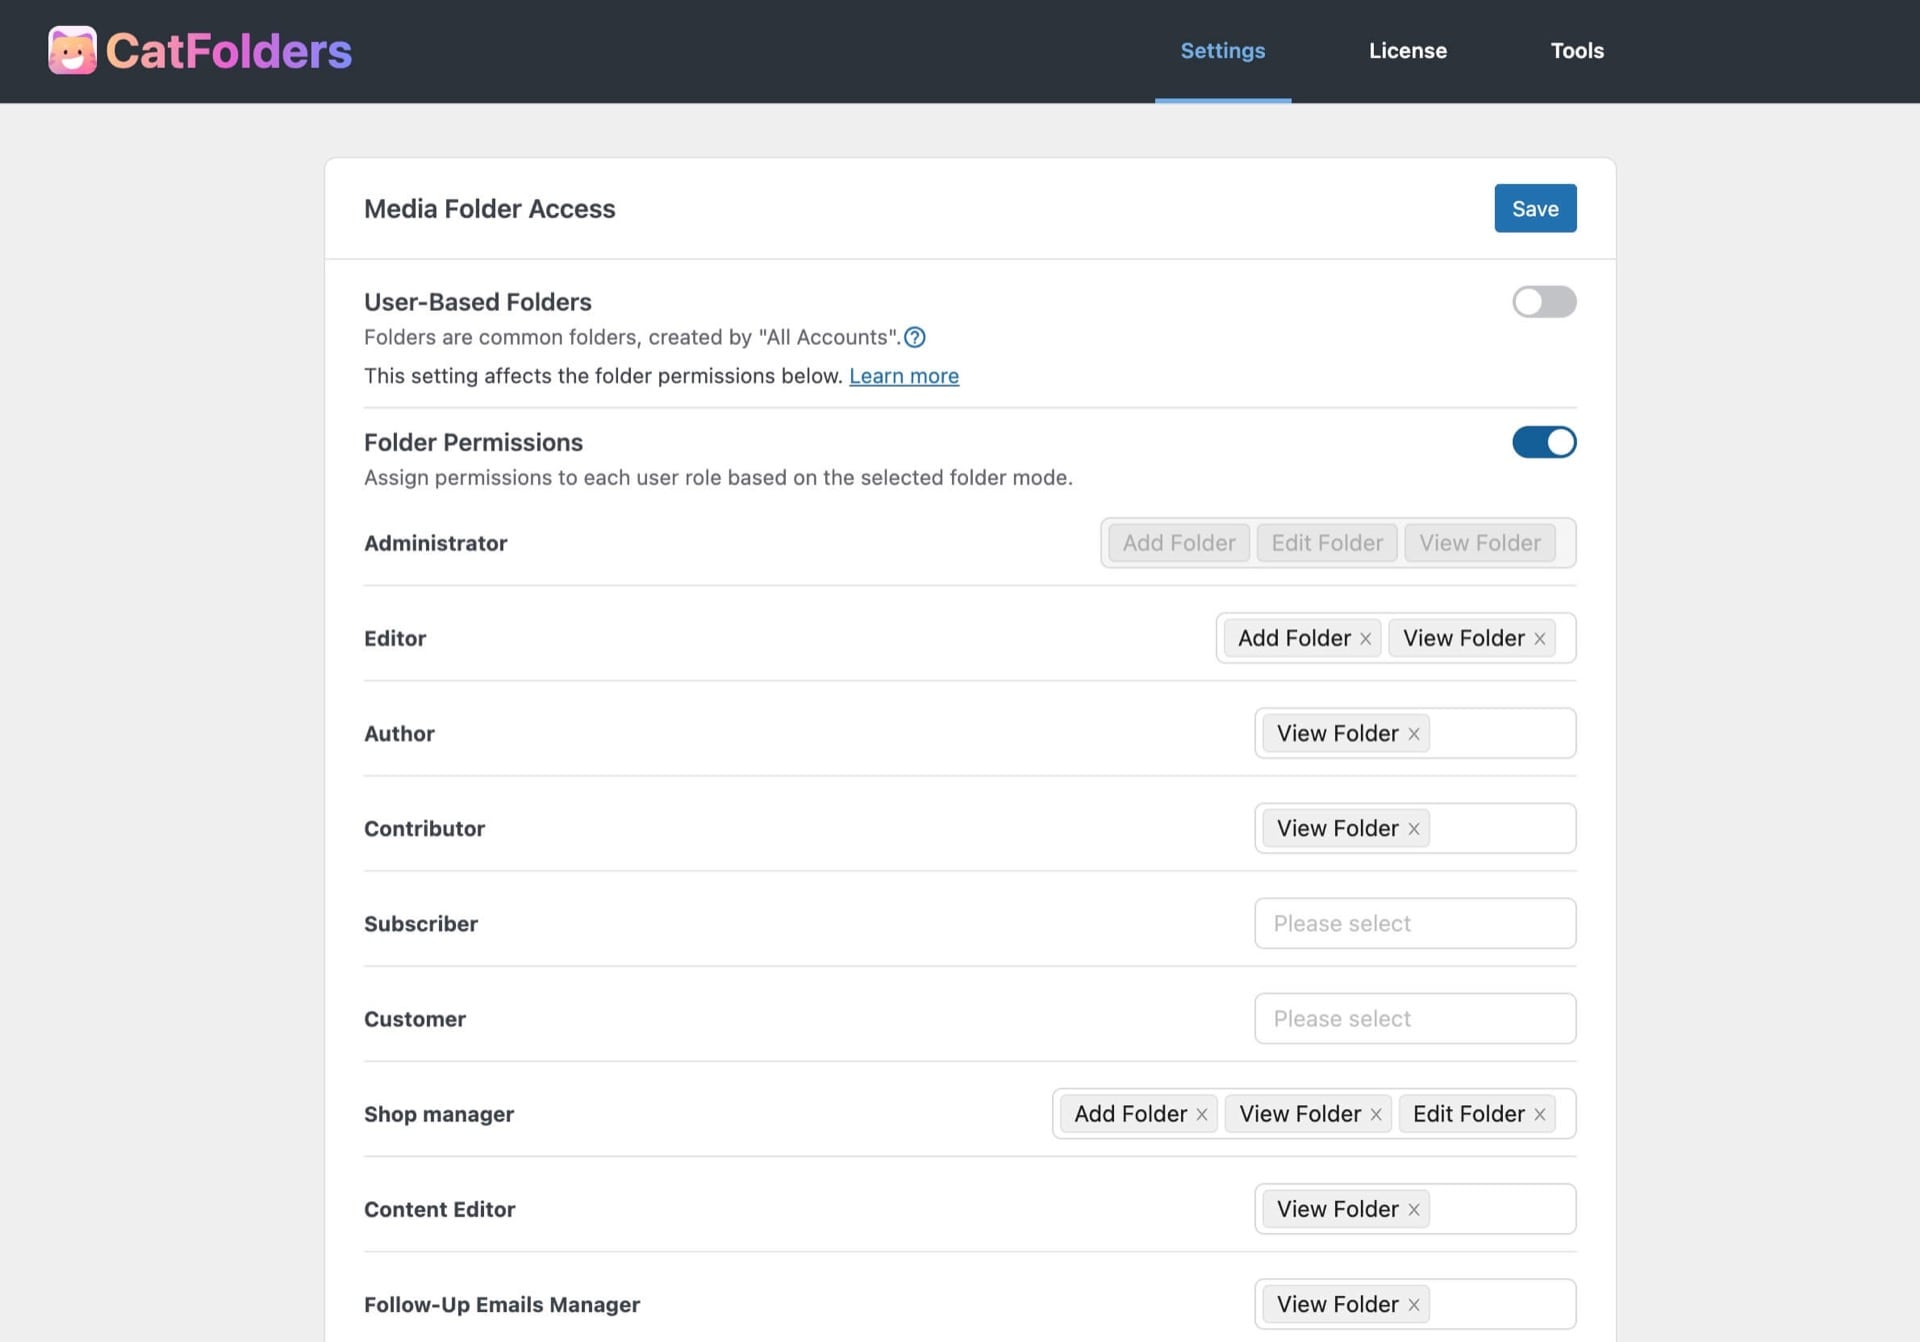 CatFolders settings for WP media folder access permissions